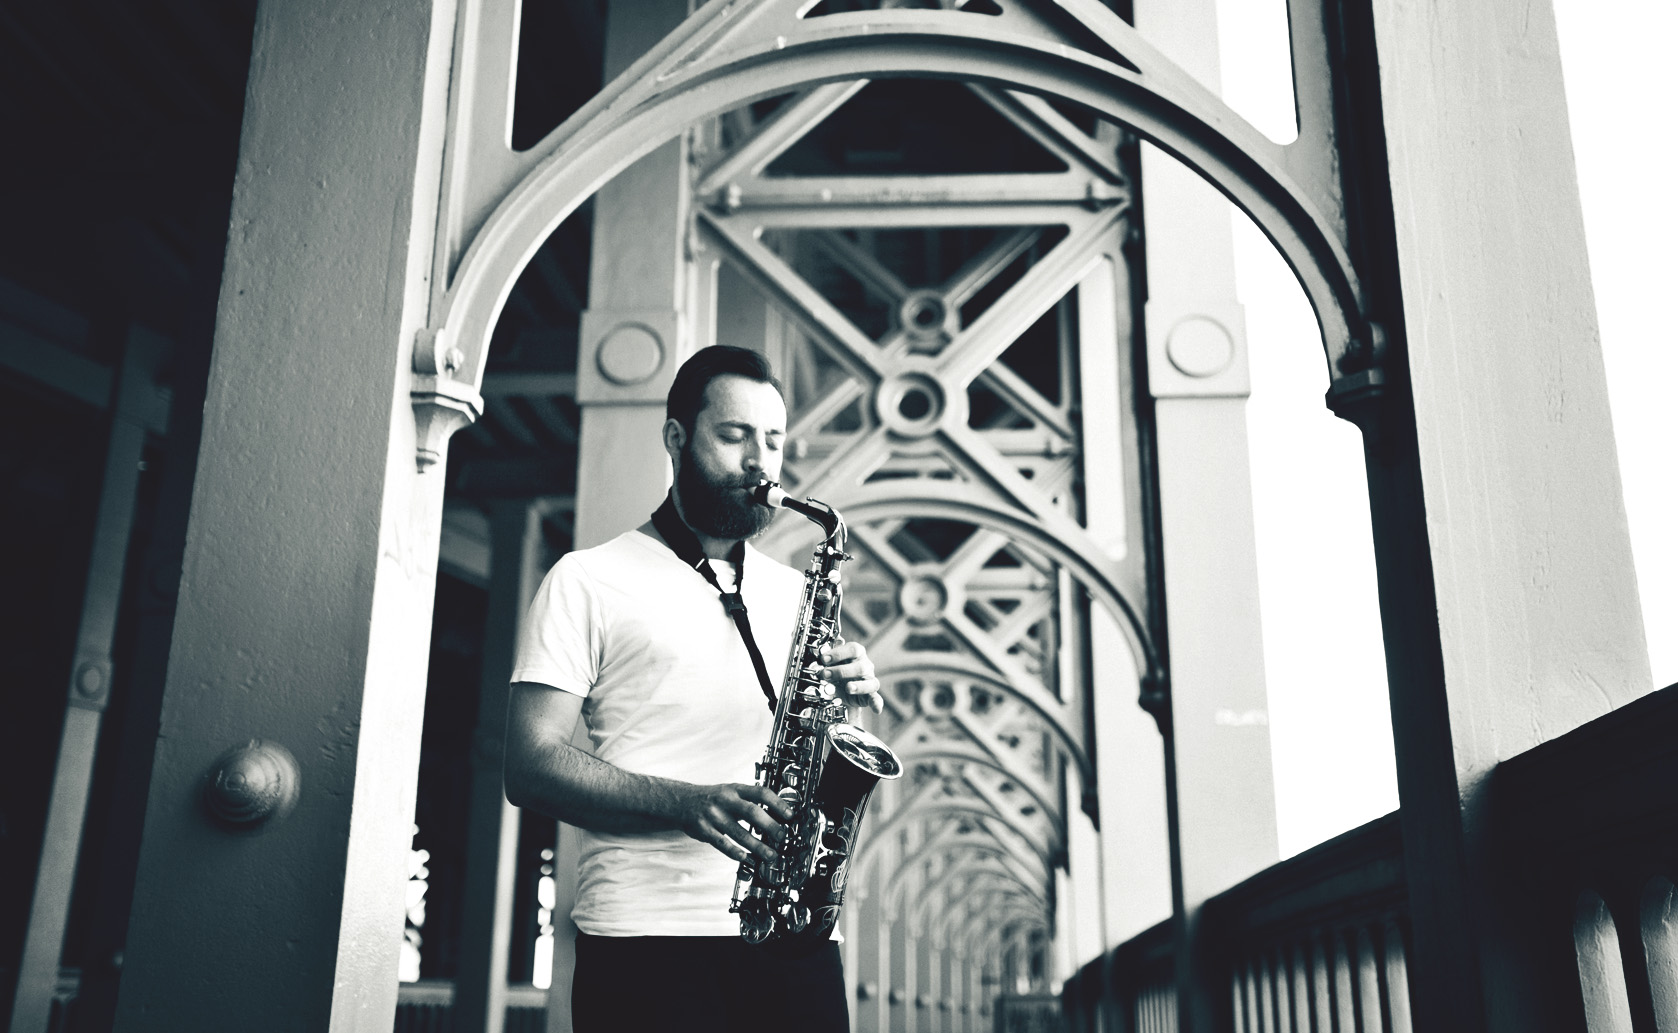 Wayne on Sax, Newcastle upon Tyne, Northumberland. Playing a Selmer series III saxophone on Tyne Bridge.